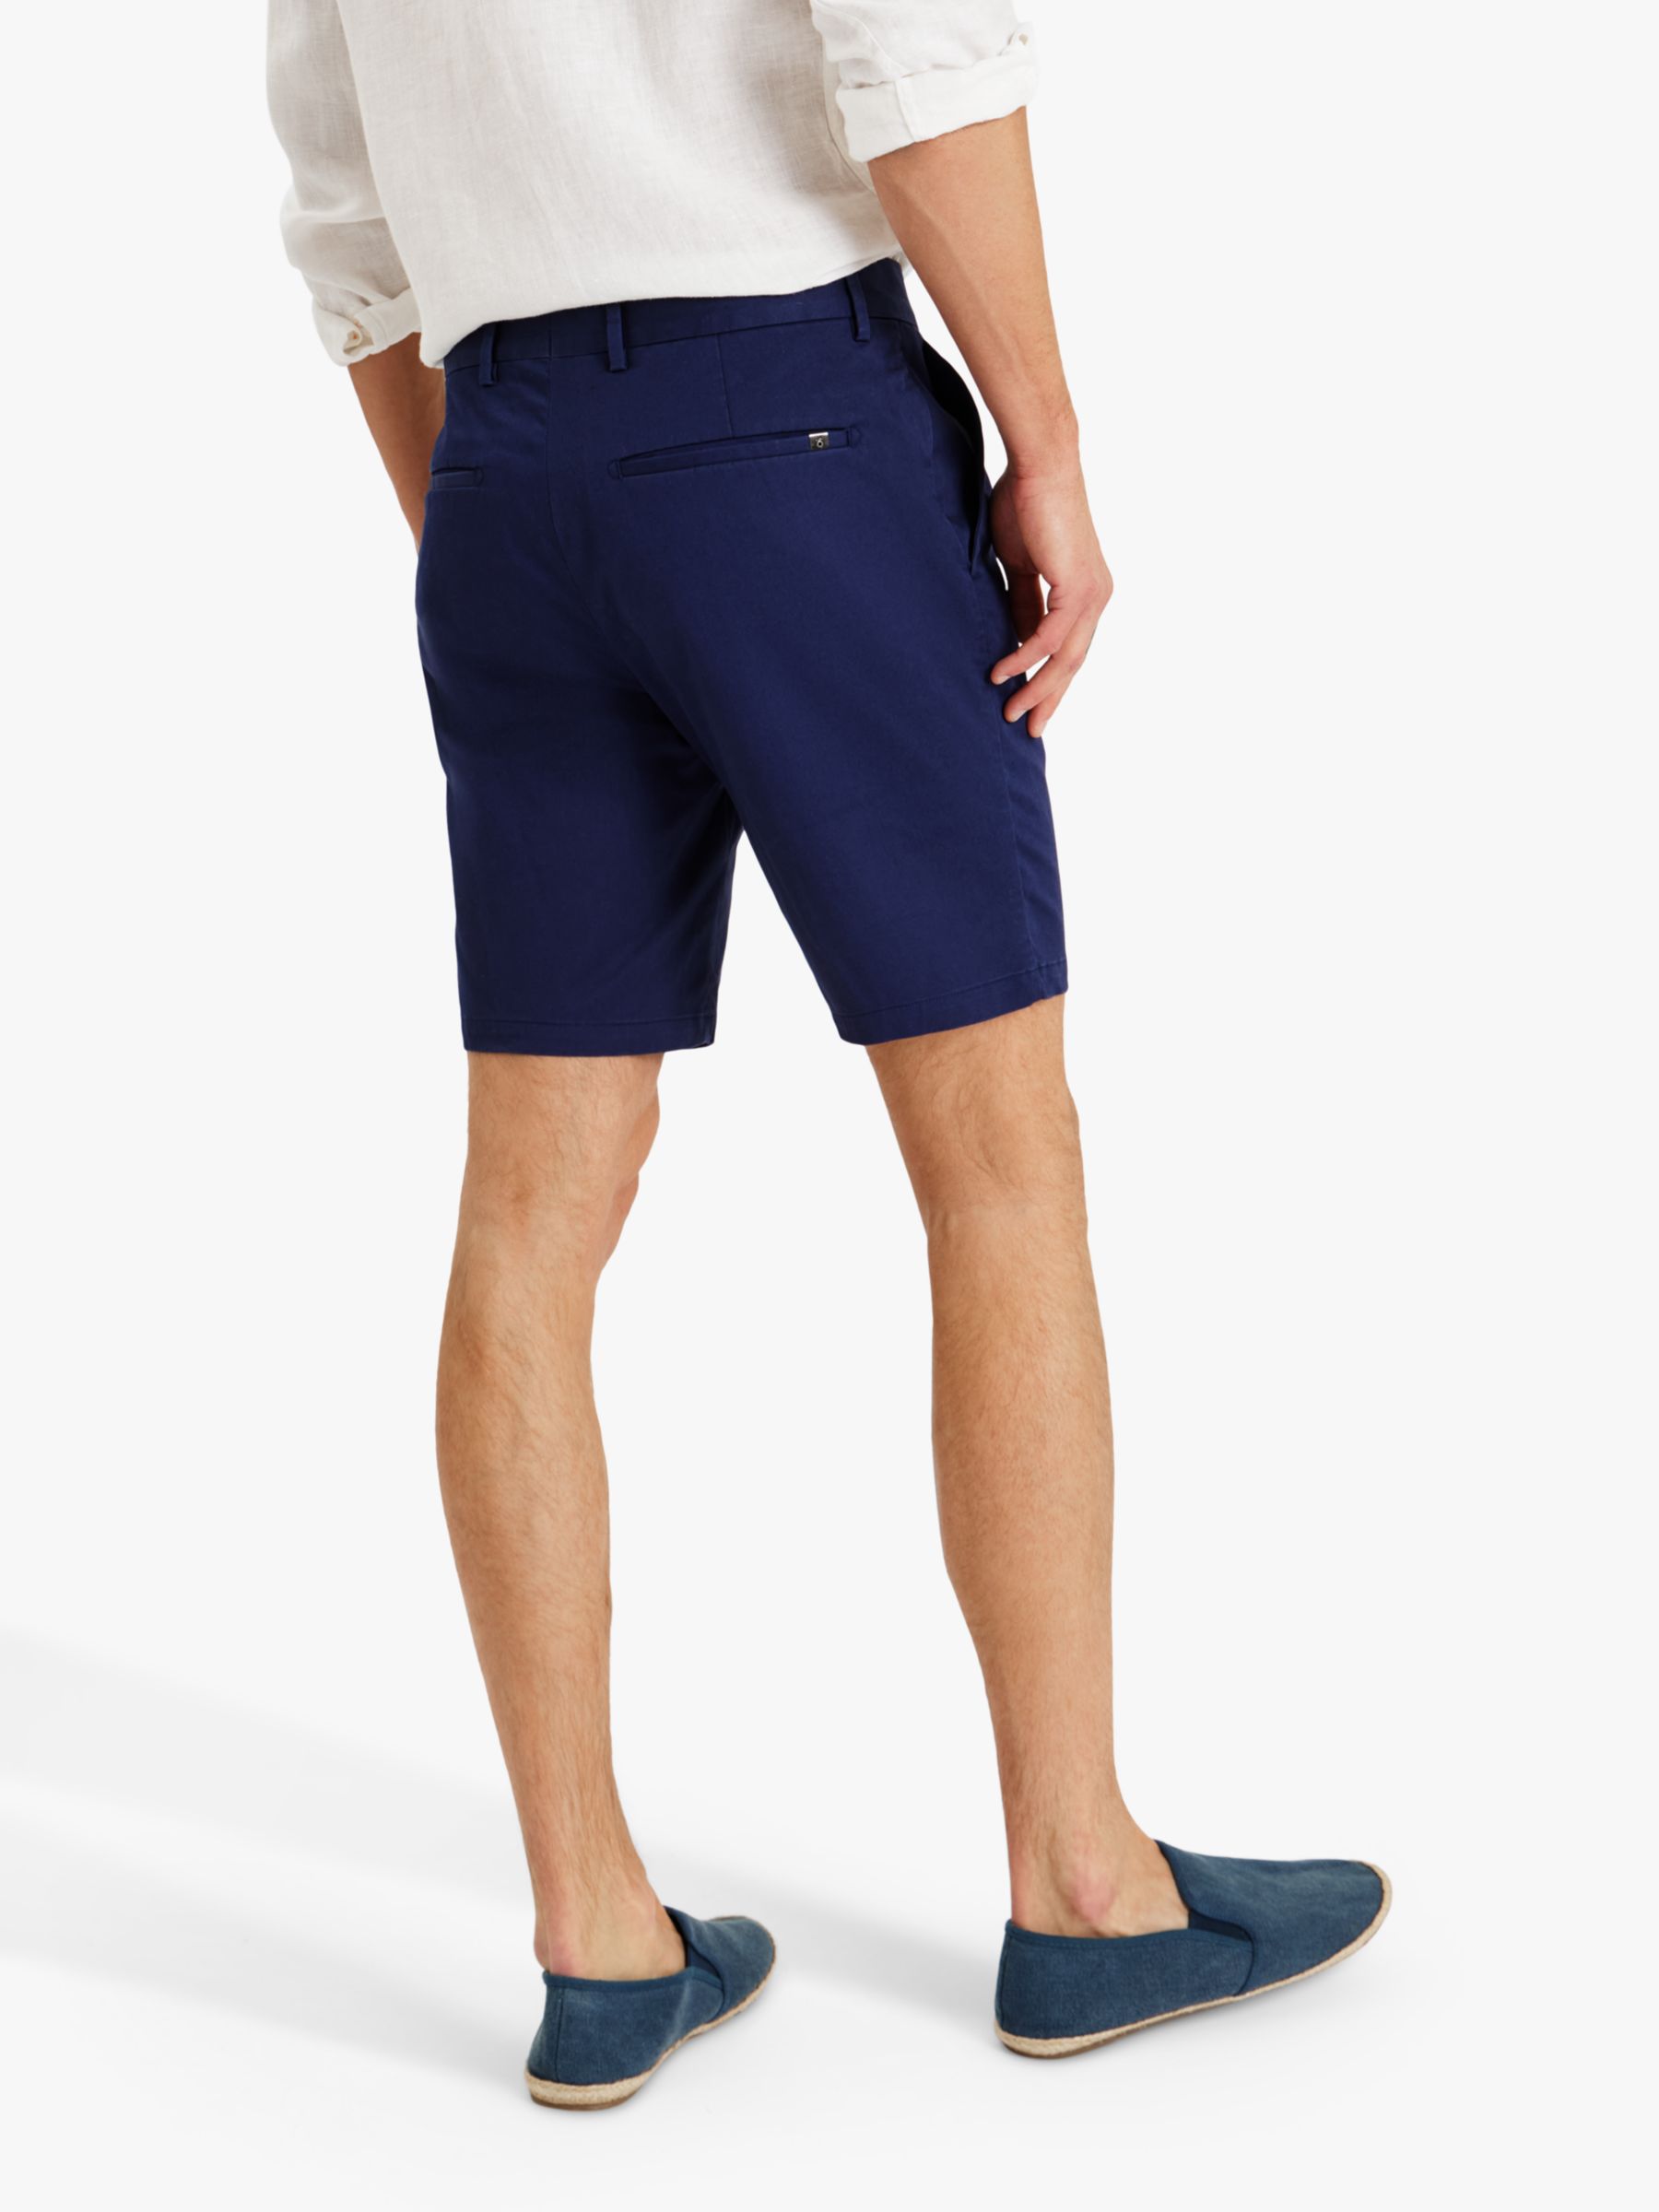 SPOKE Sharps Cotton Blend Narrow Thigh Shorts, Navy, 28S